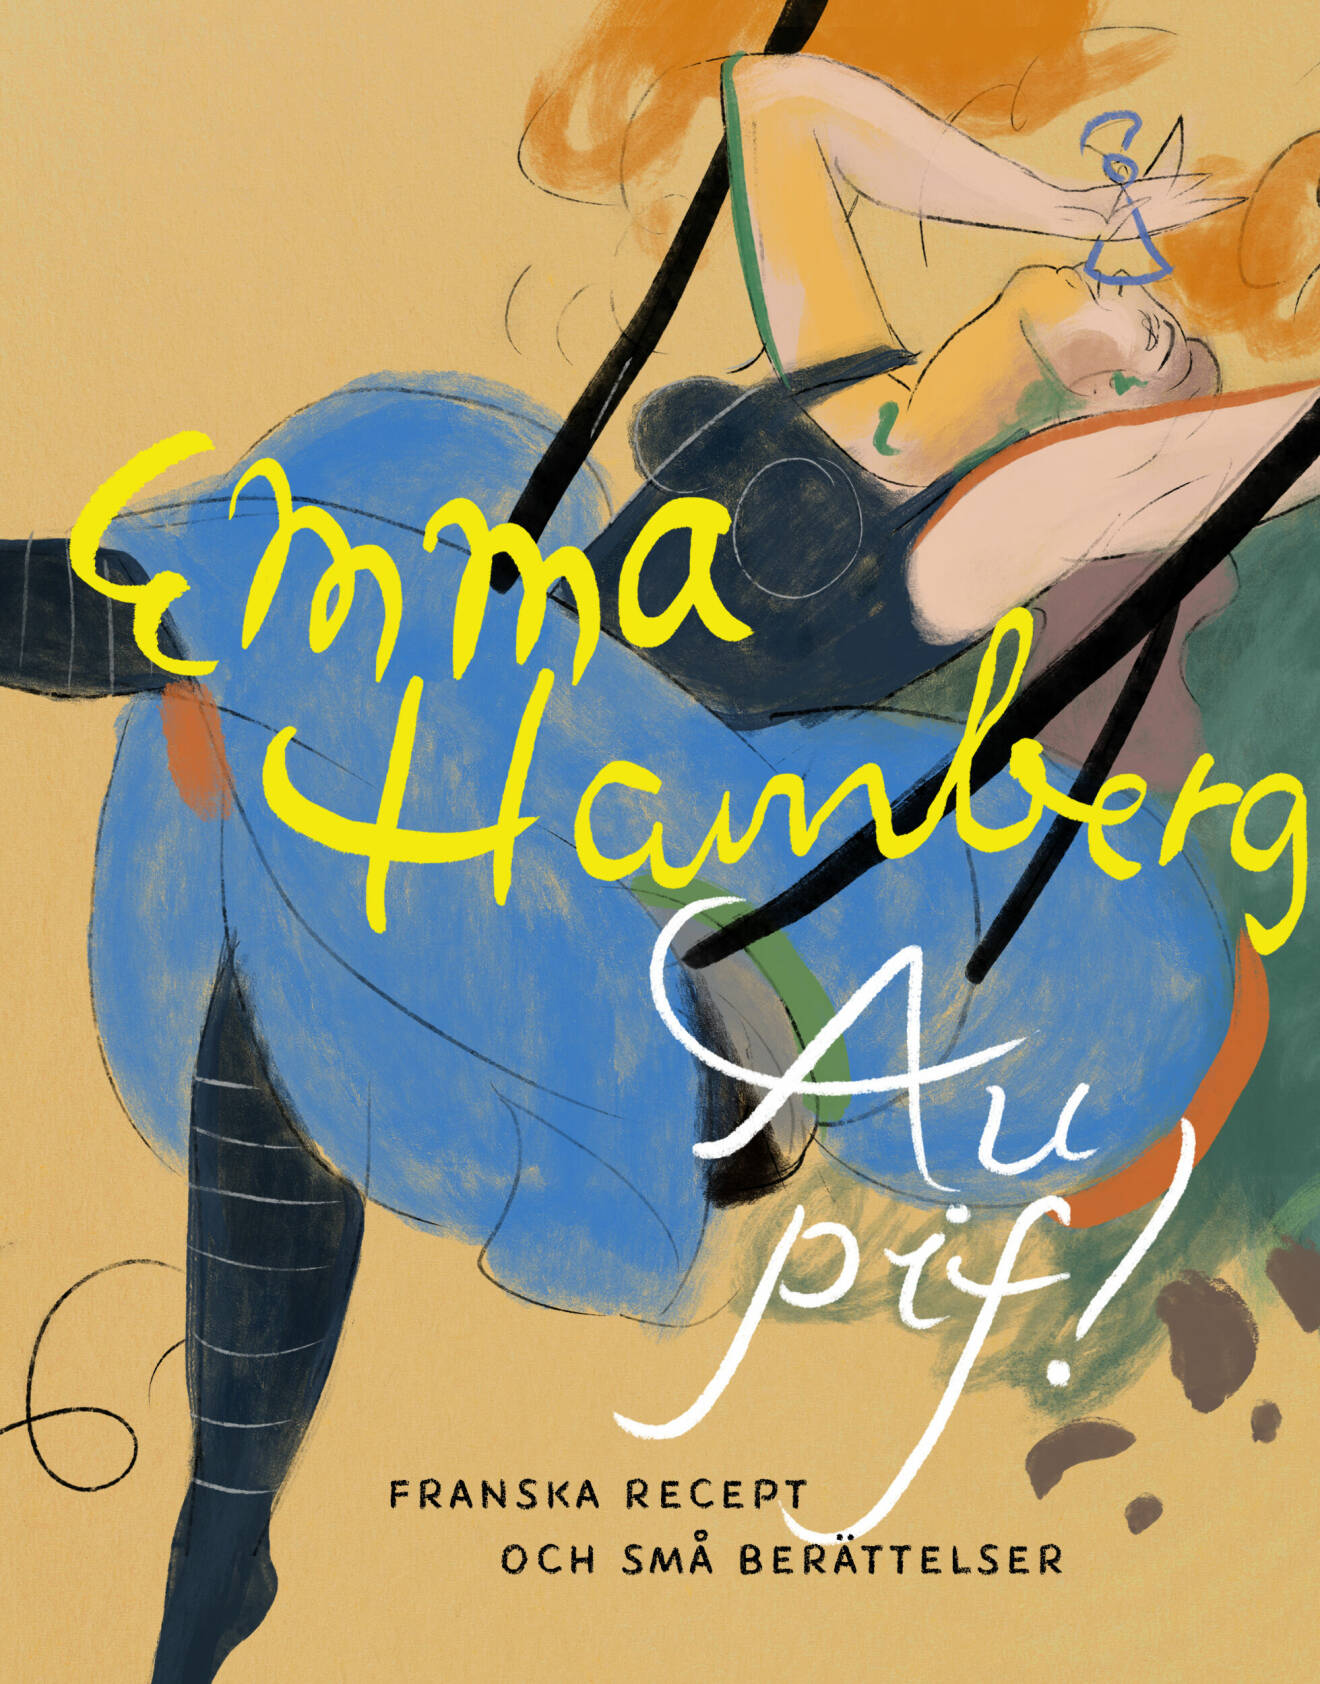 Emma Hamberg Au pif